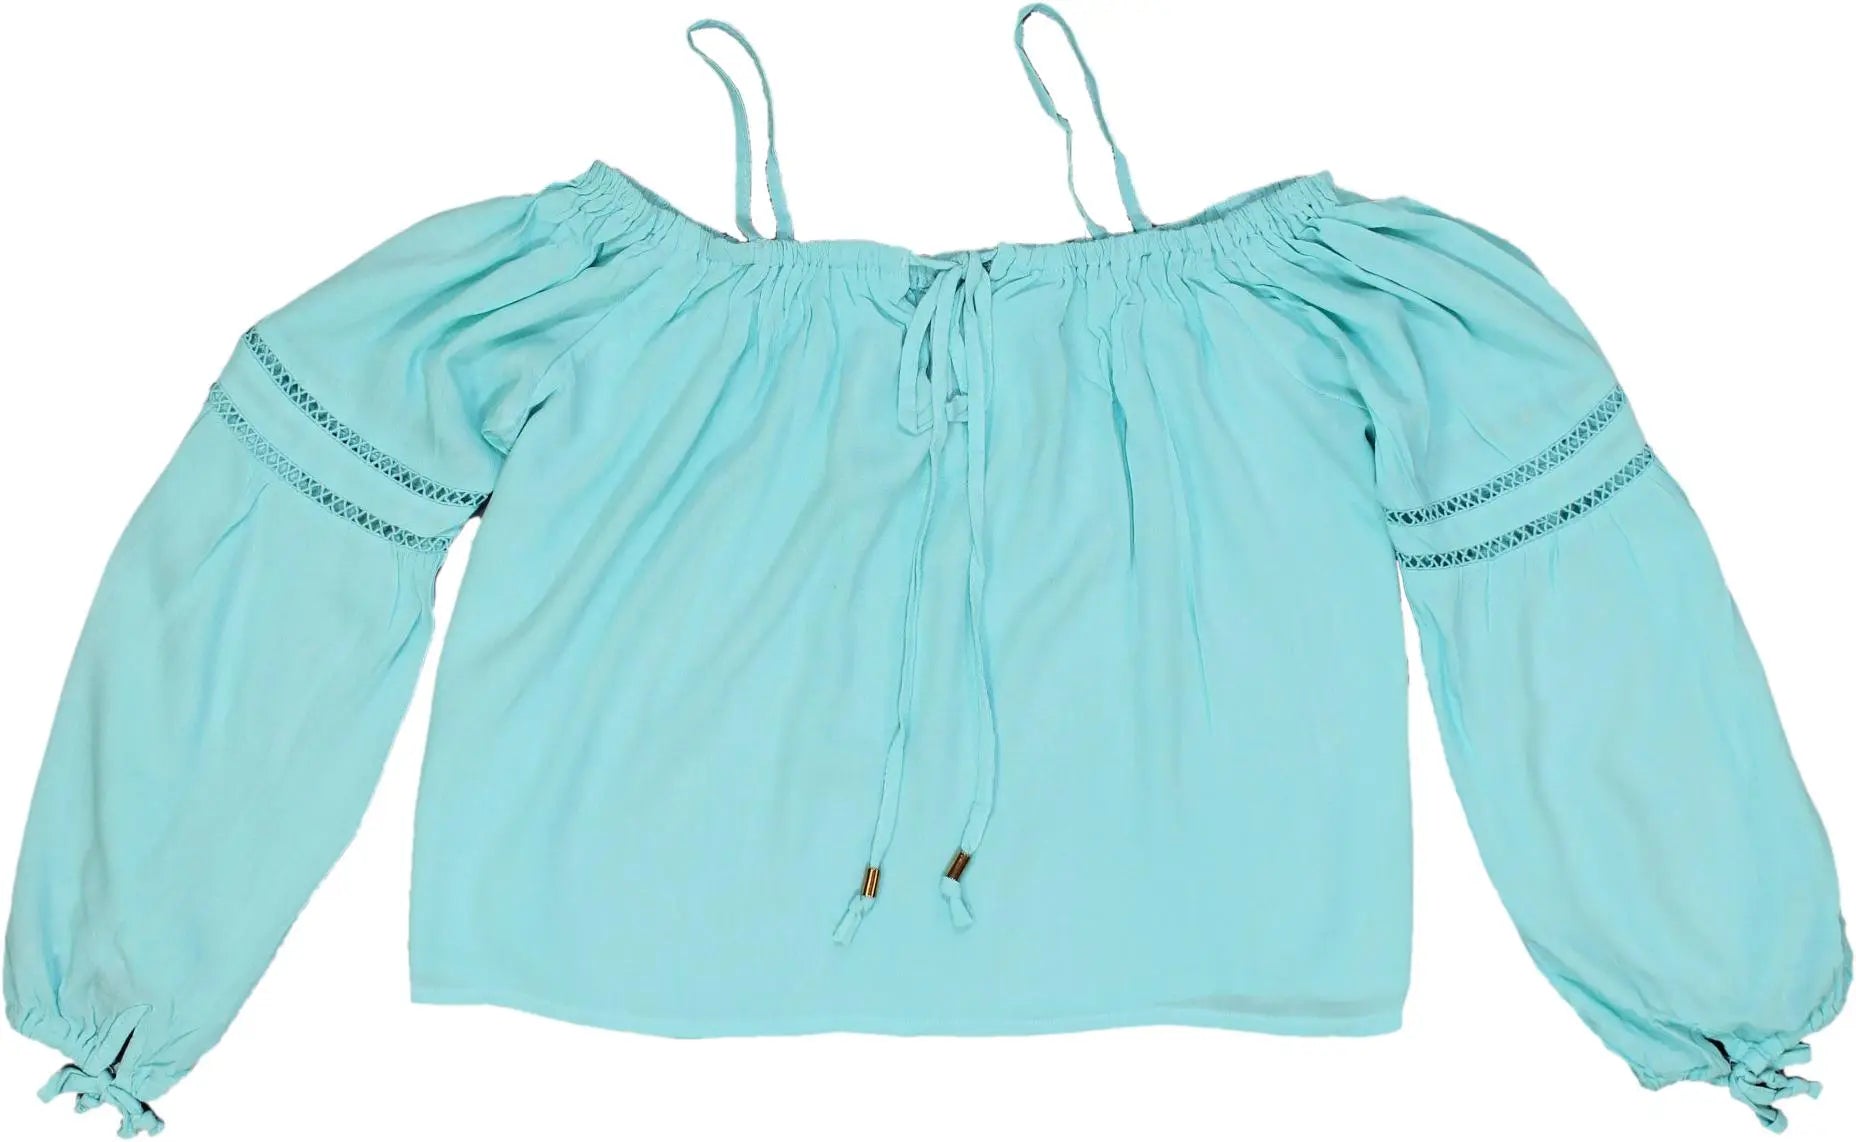 Belcci - BLUE1915- ThriftTale.com - Vintage and second handclothing